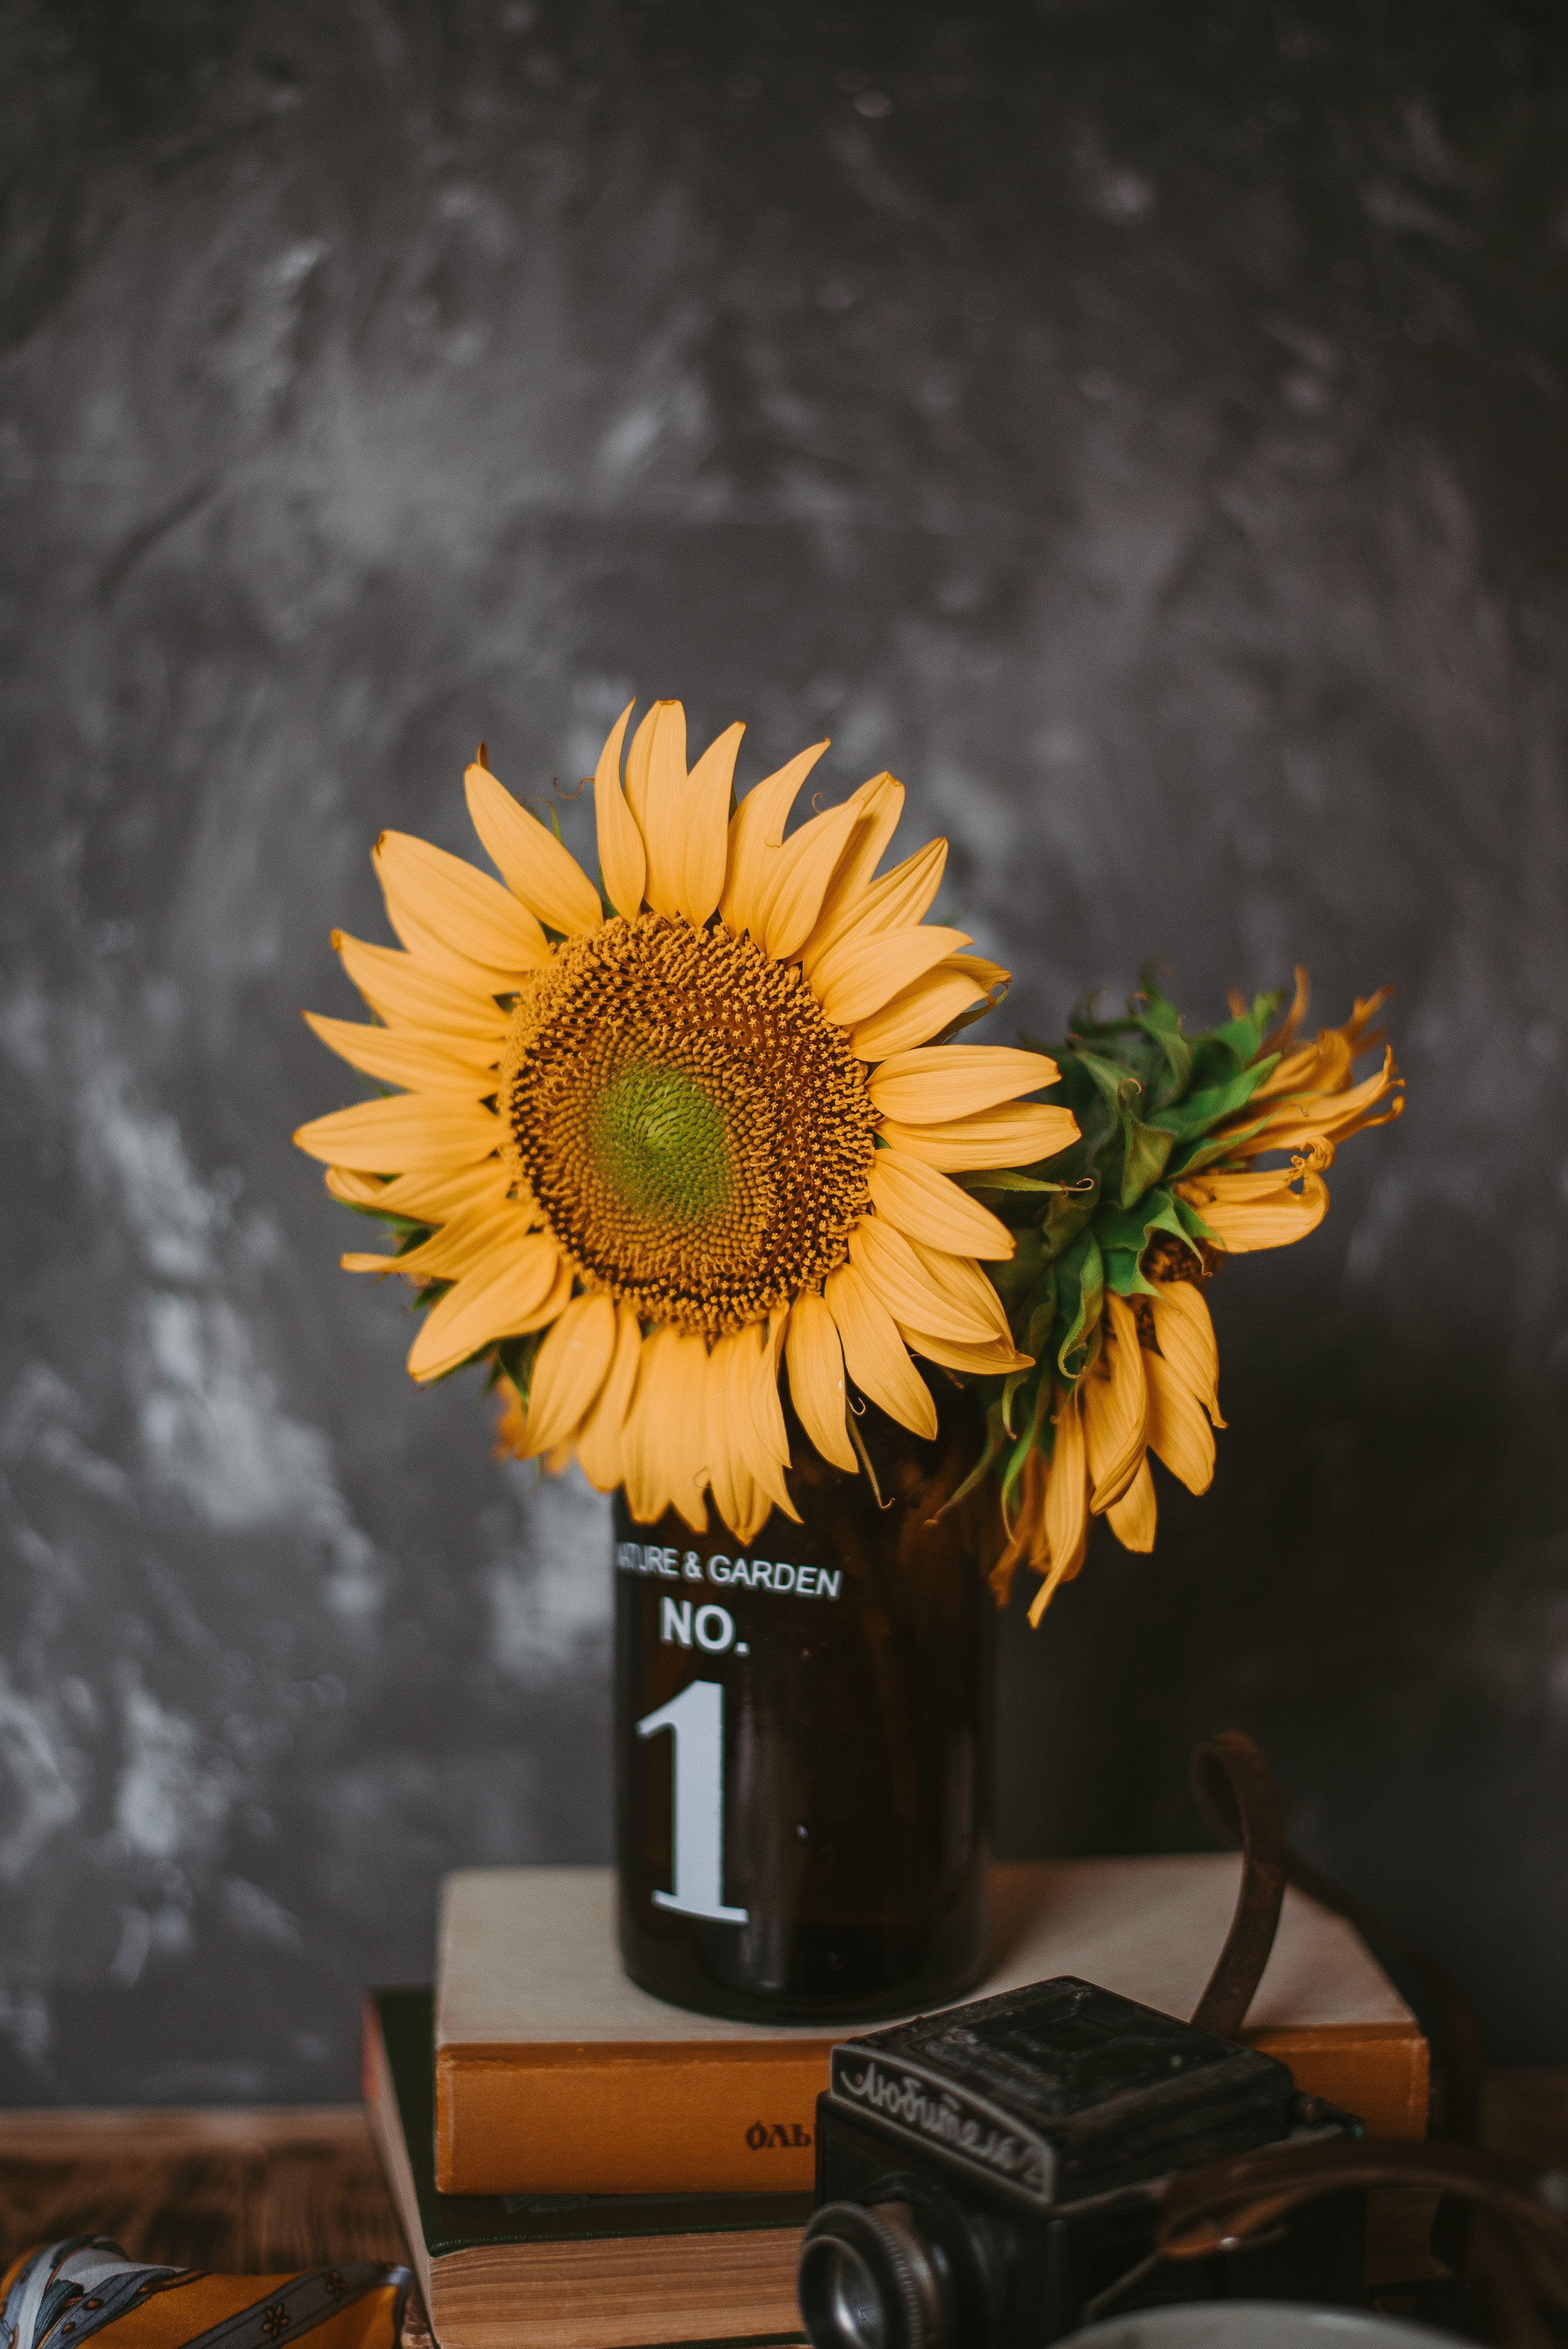 sunflowers, books, flowers, miscellanea, miscellaneous, vase, camera